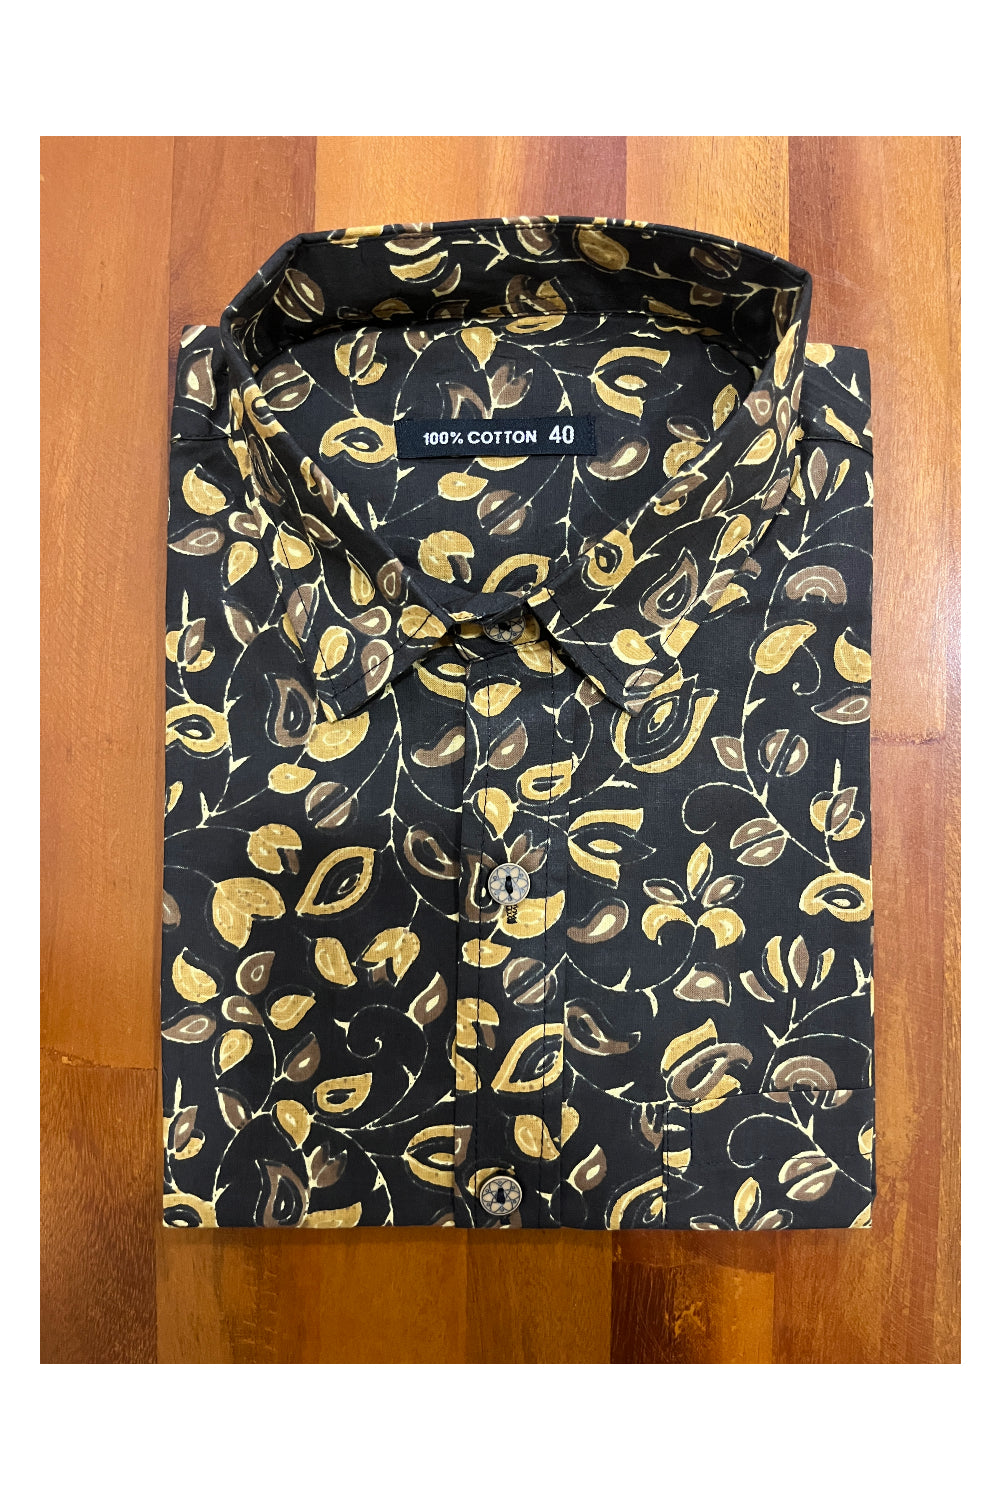 Southloom Jaipur Cotton Black Yellow Hand Block Printed Shirt (Half Sleeves)